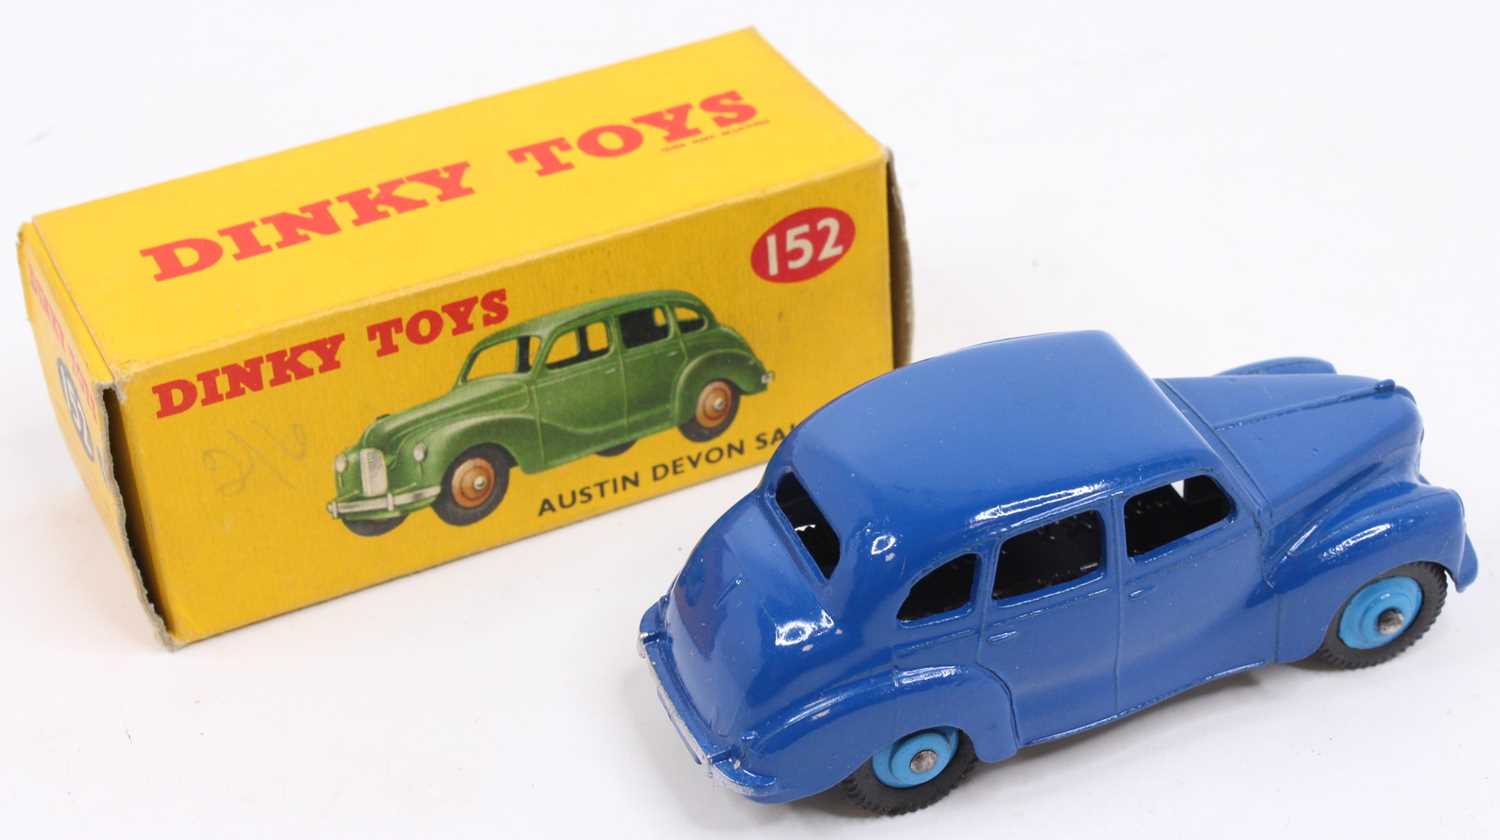 Dinky Toys No. 152 Austin Devon Saloon, with a dark blue body, light blue ridged hubs, tinplate - Image 2 of 3